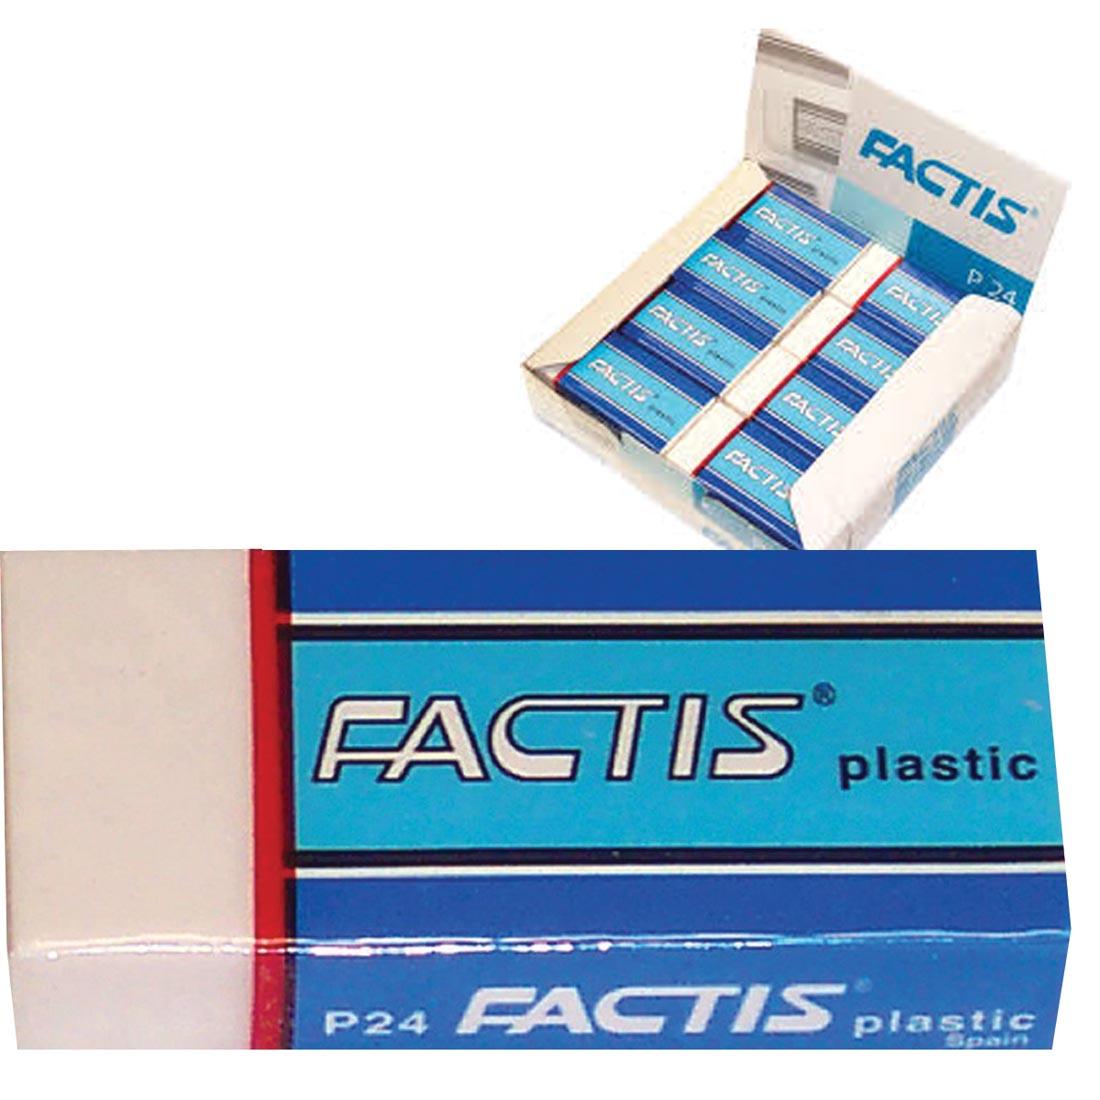 General's Factis Plastic Eraser and Carving Block 24-Count Box plus close-up of one eraser